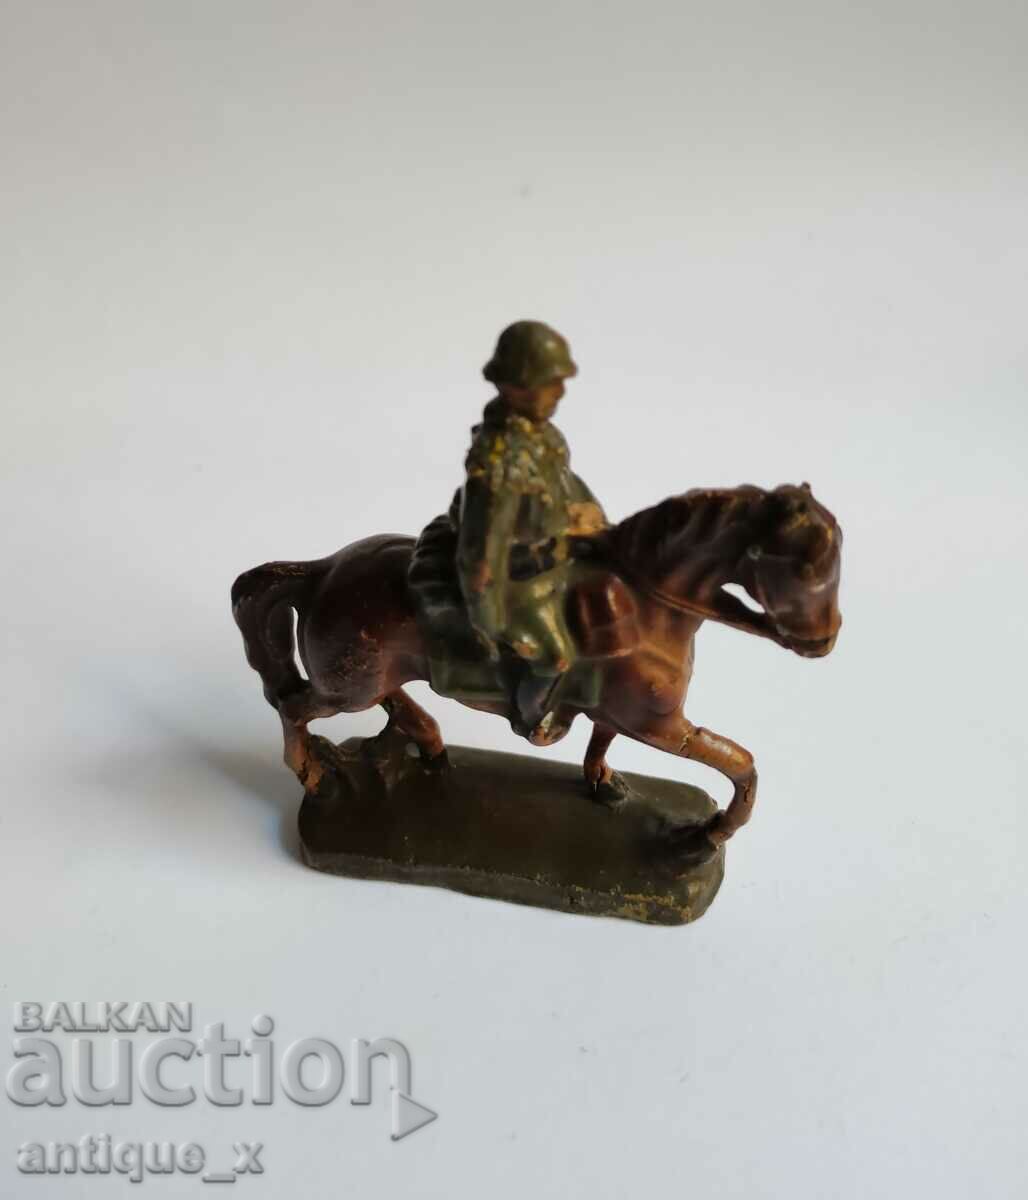 Old German figurine - Duro - soldier on horseback